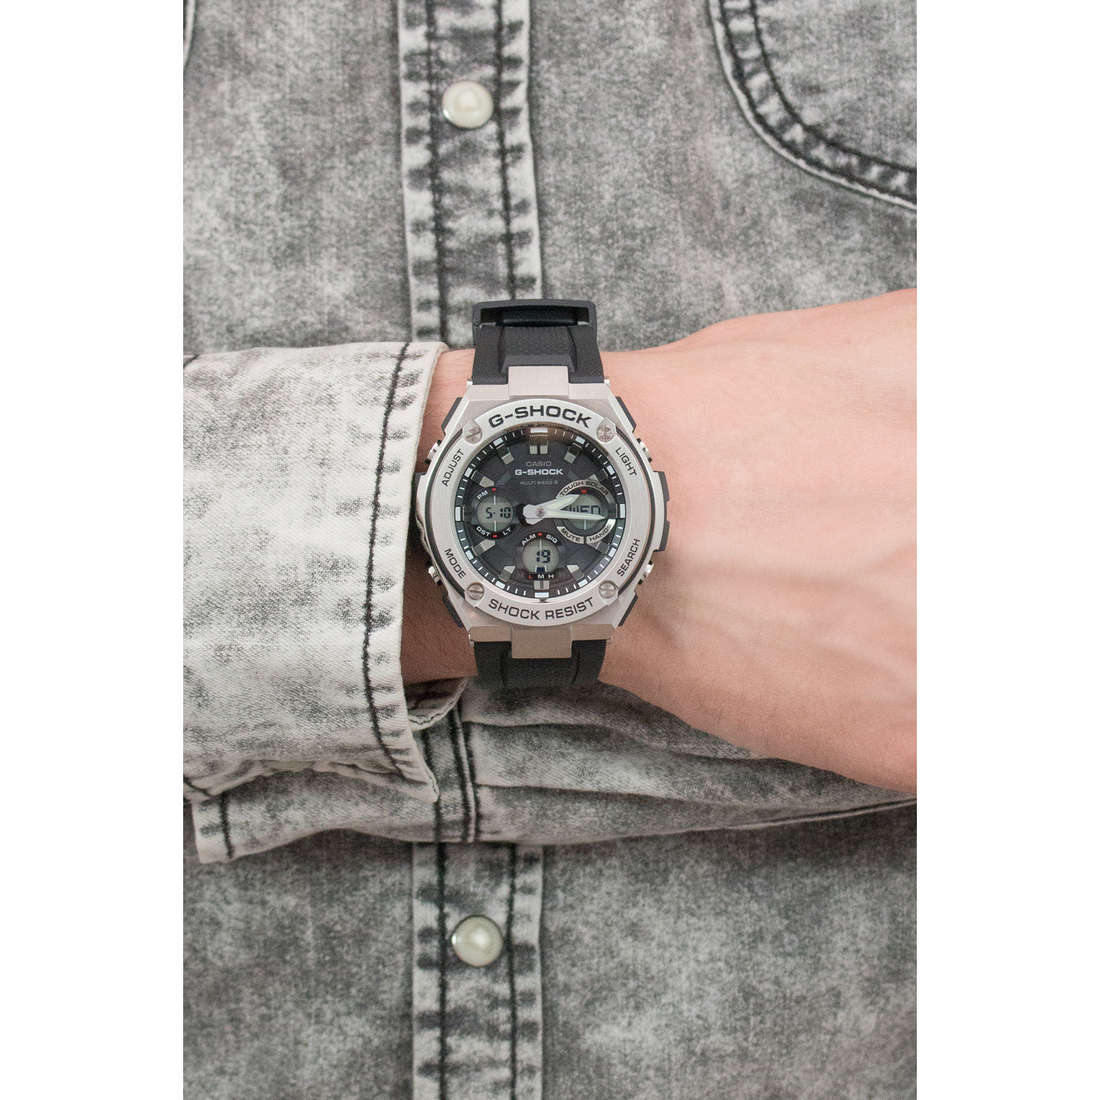 watch multifunction man G-Shock GST-W110-1AER